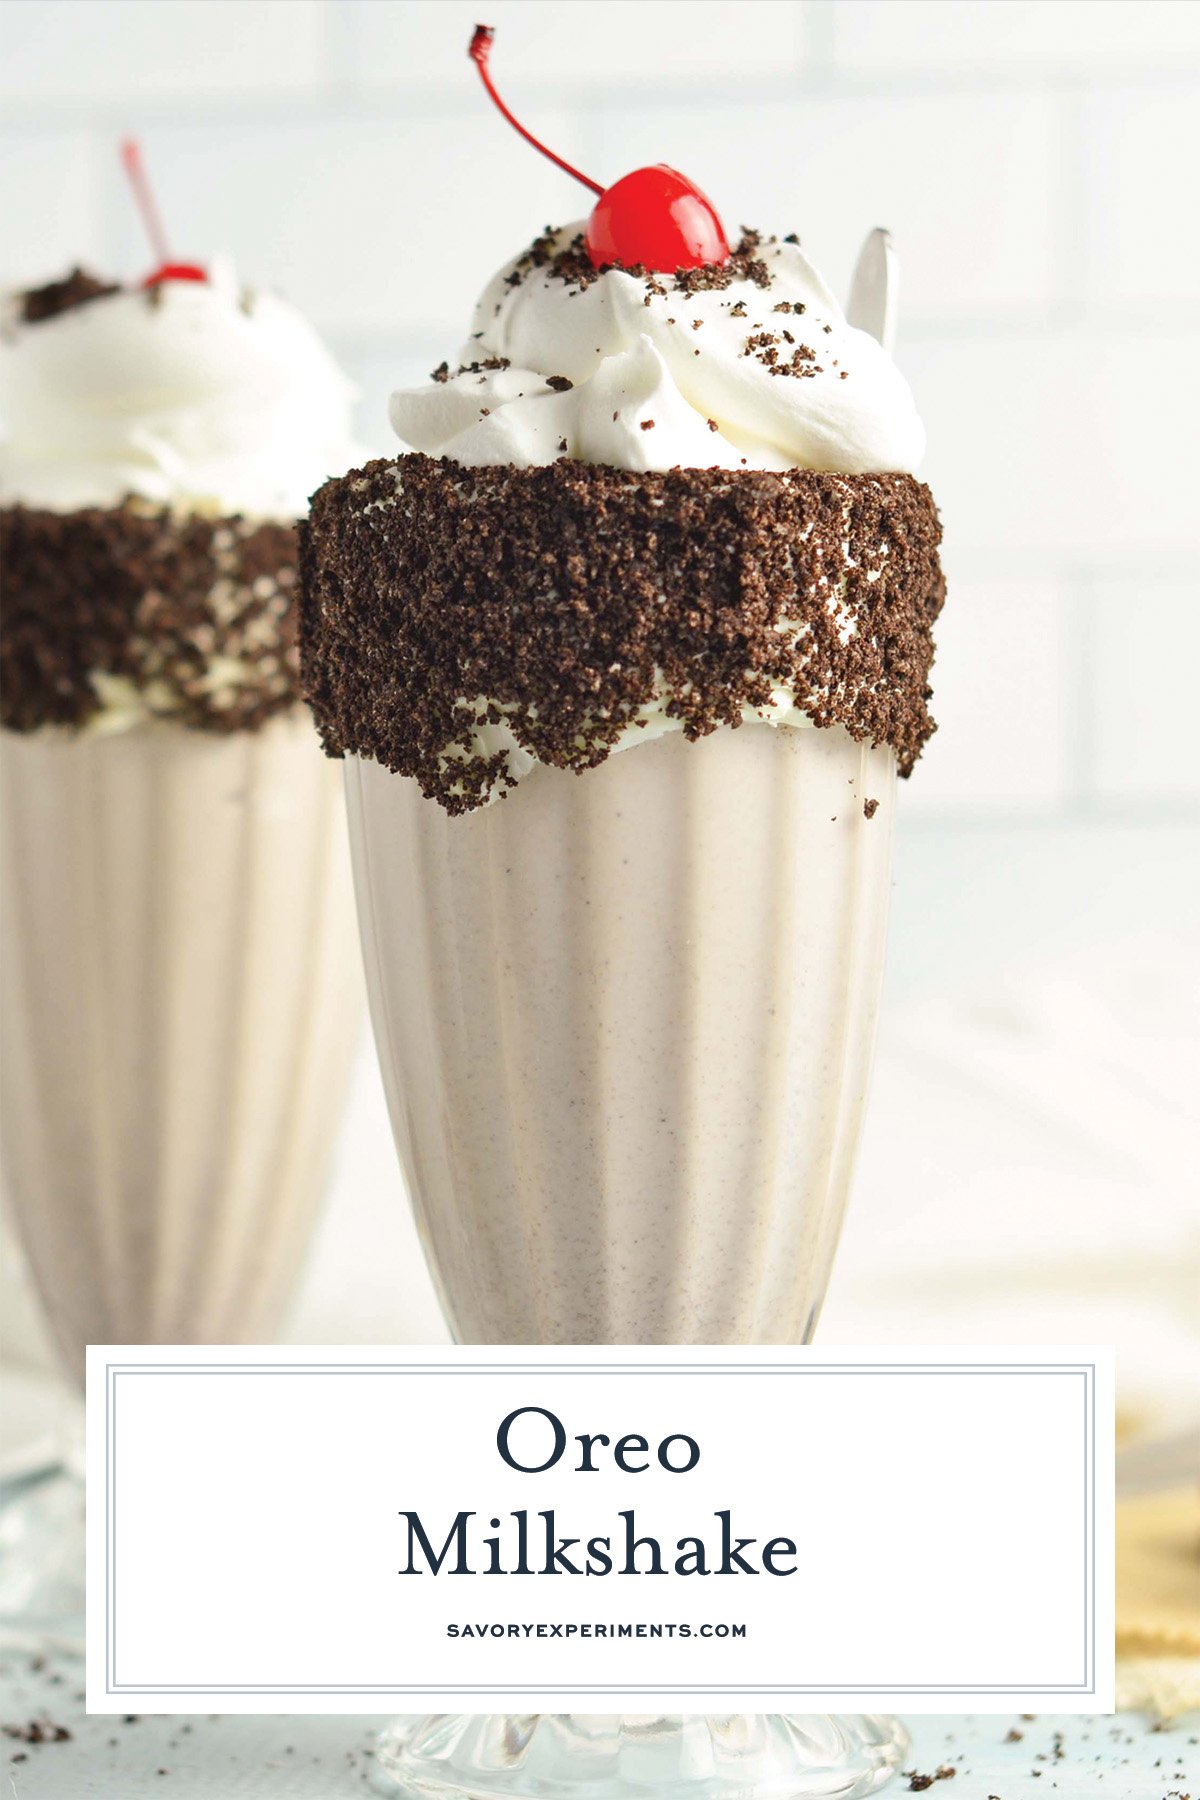 oreo milkshake with text overlay